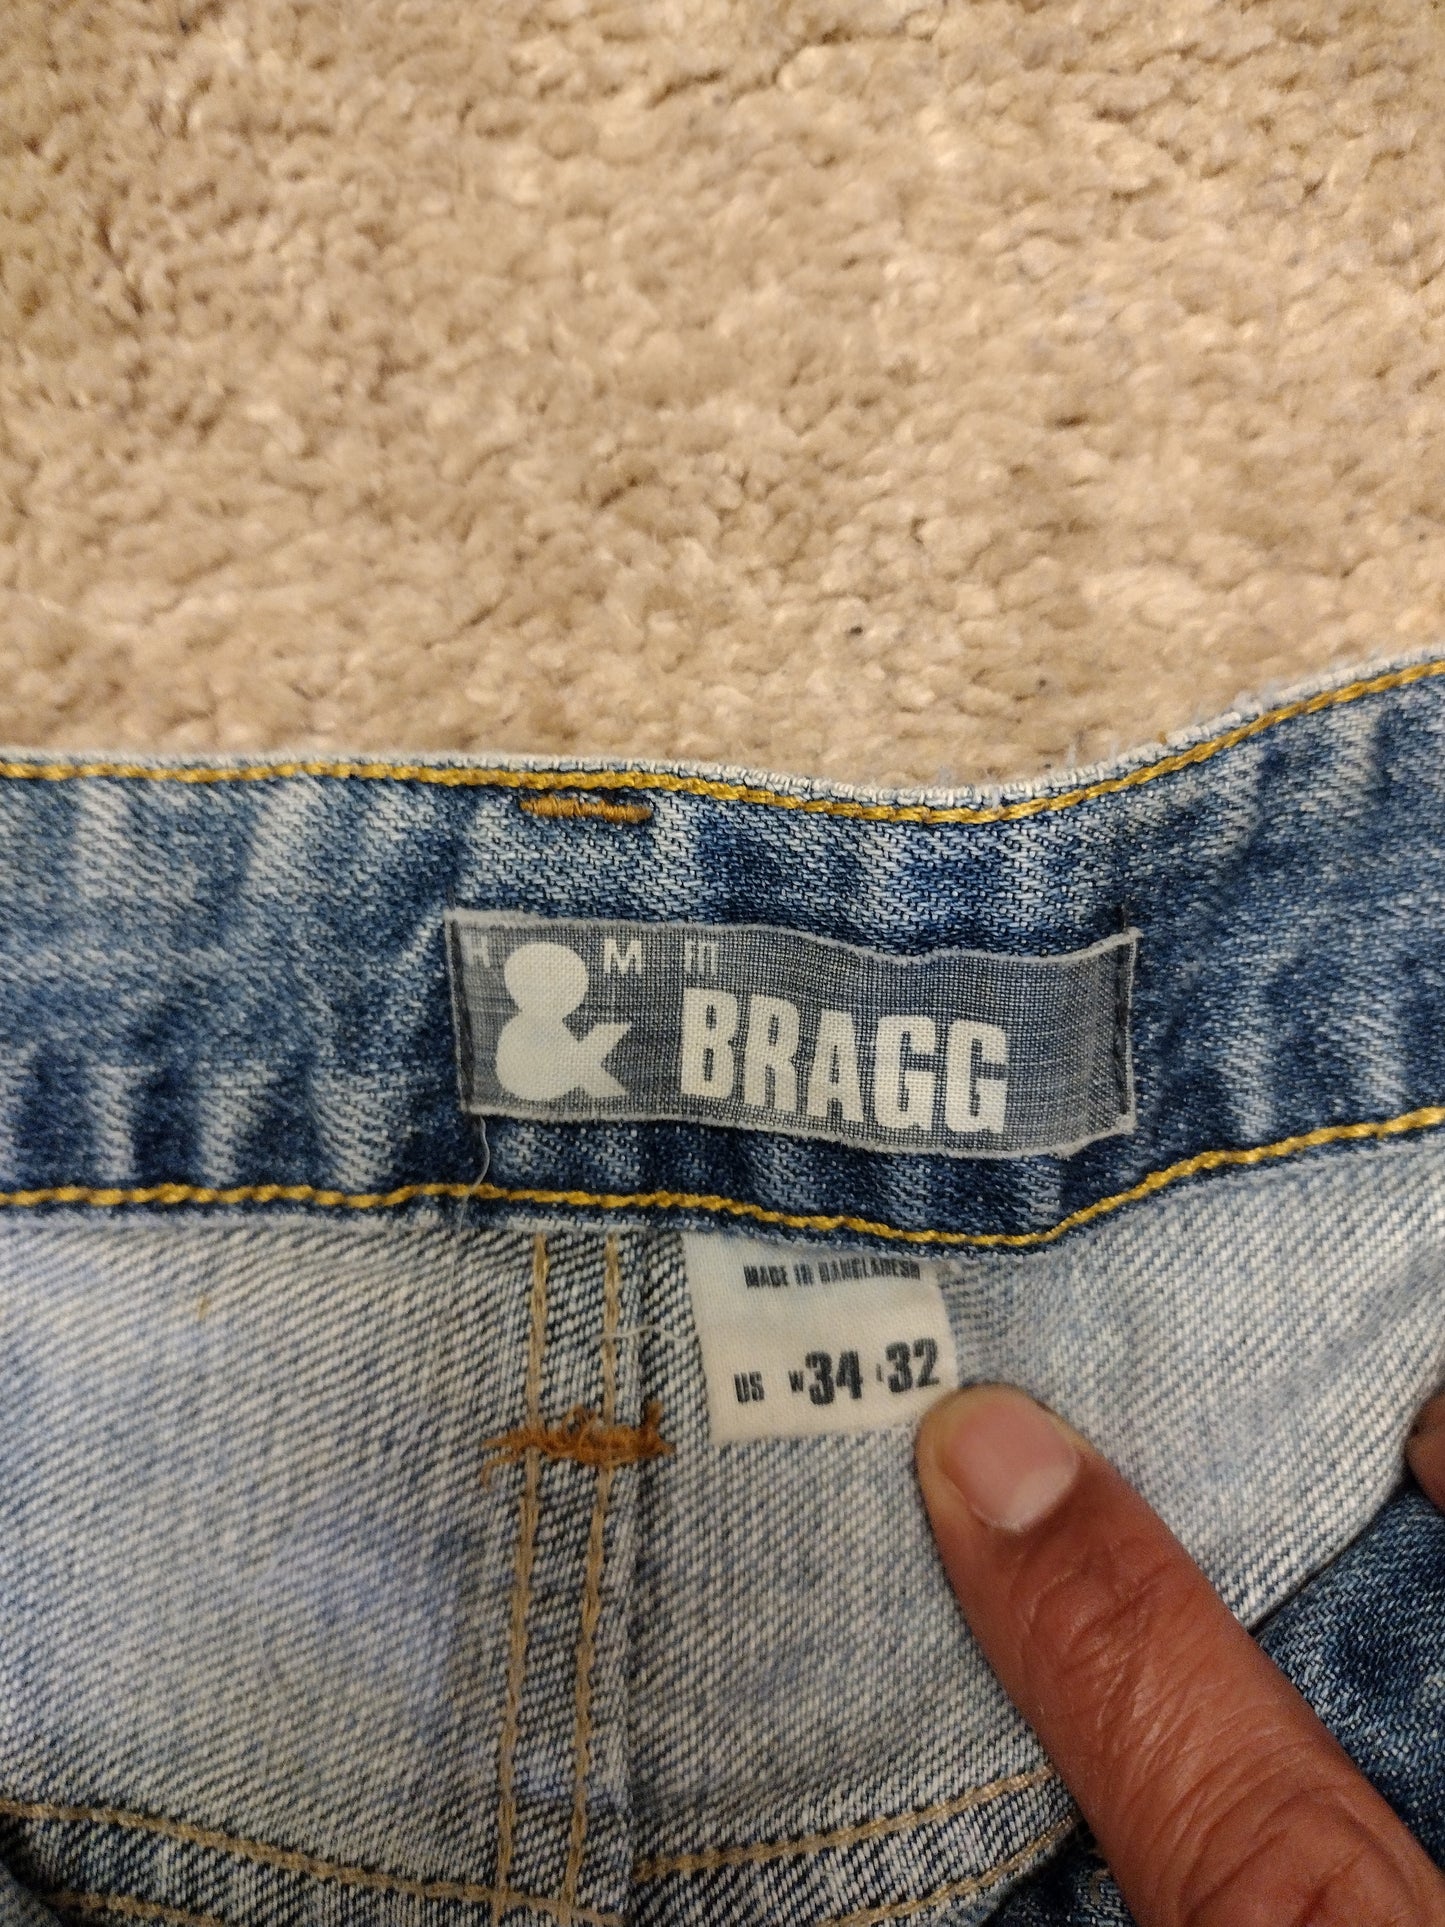 H&M Bragg Women's Denim Jeans